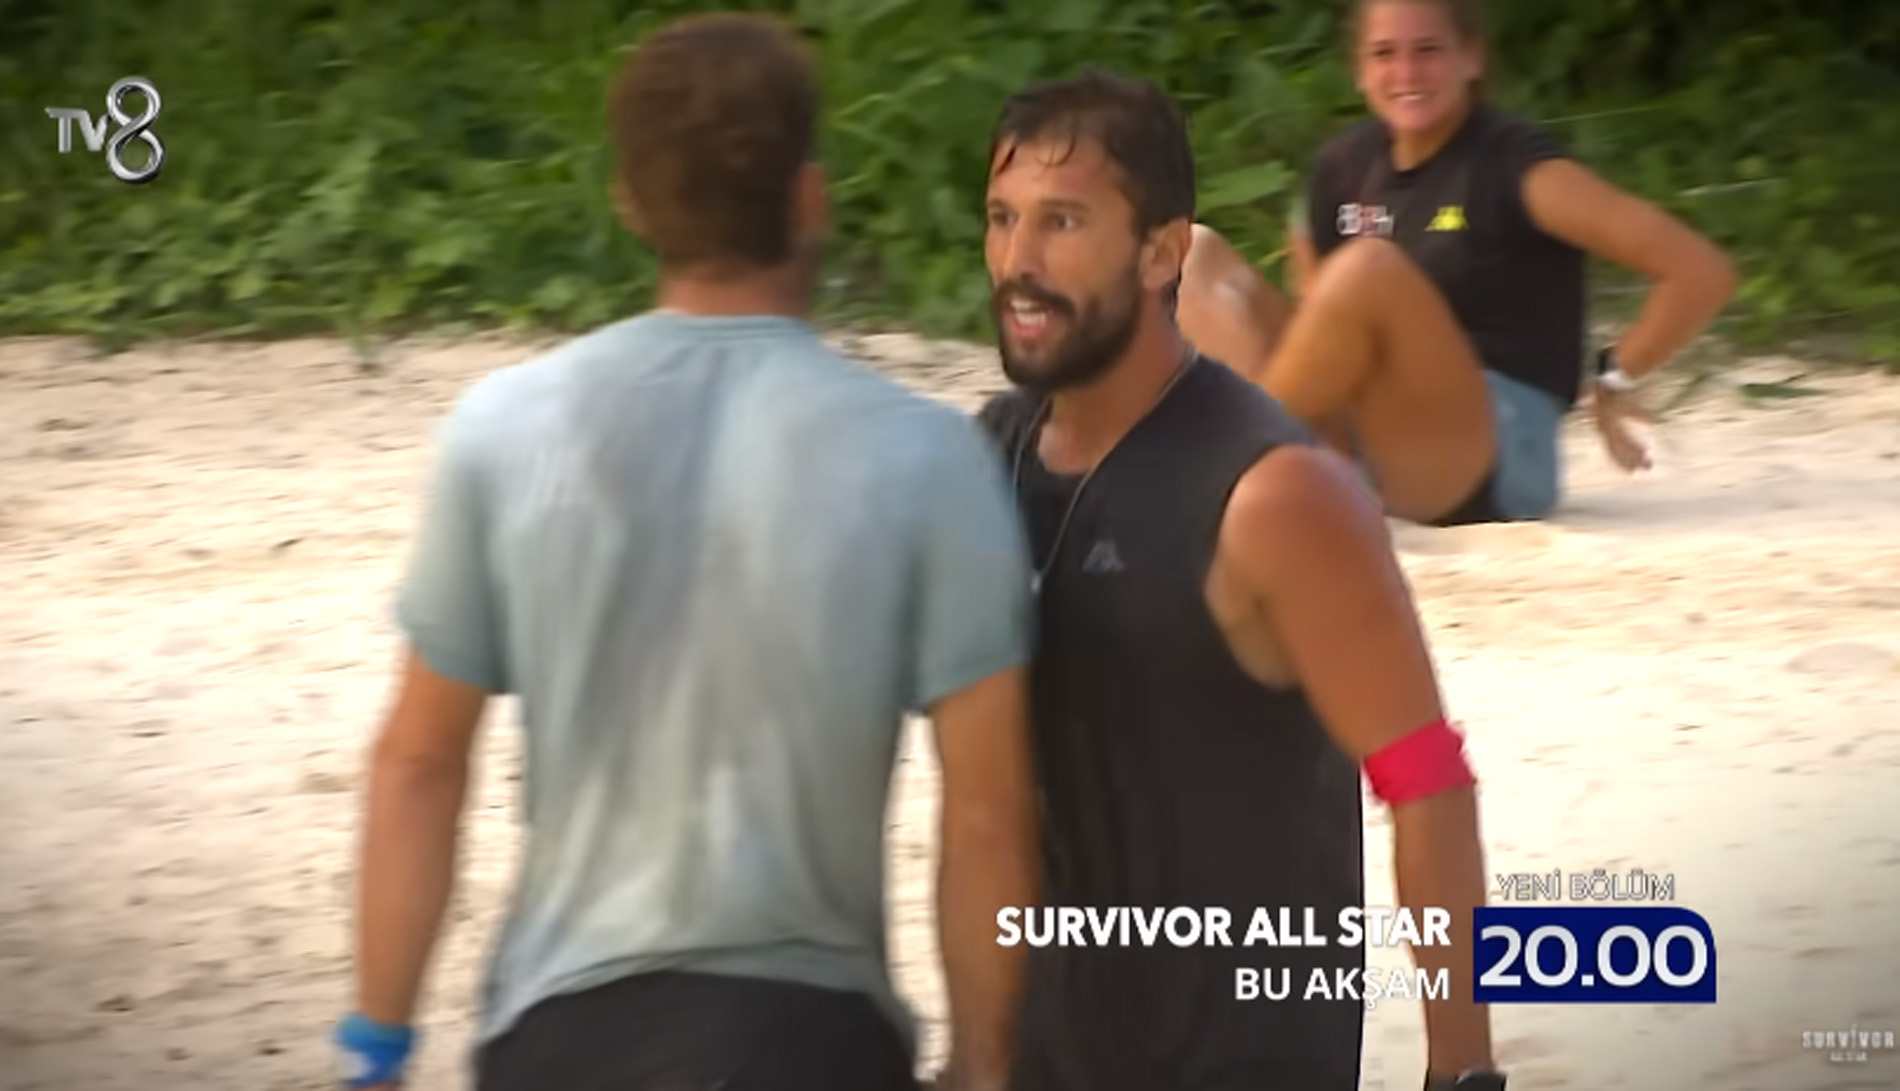 TV8 Survivor All Star 100. bölüm full, tek parça izle | Survivor All Star son bölüm izle Youtube